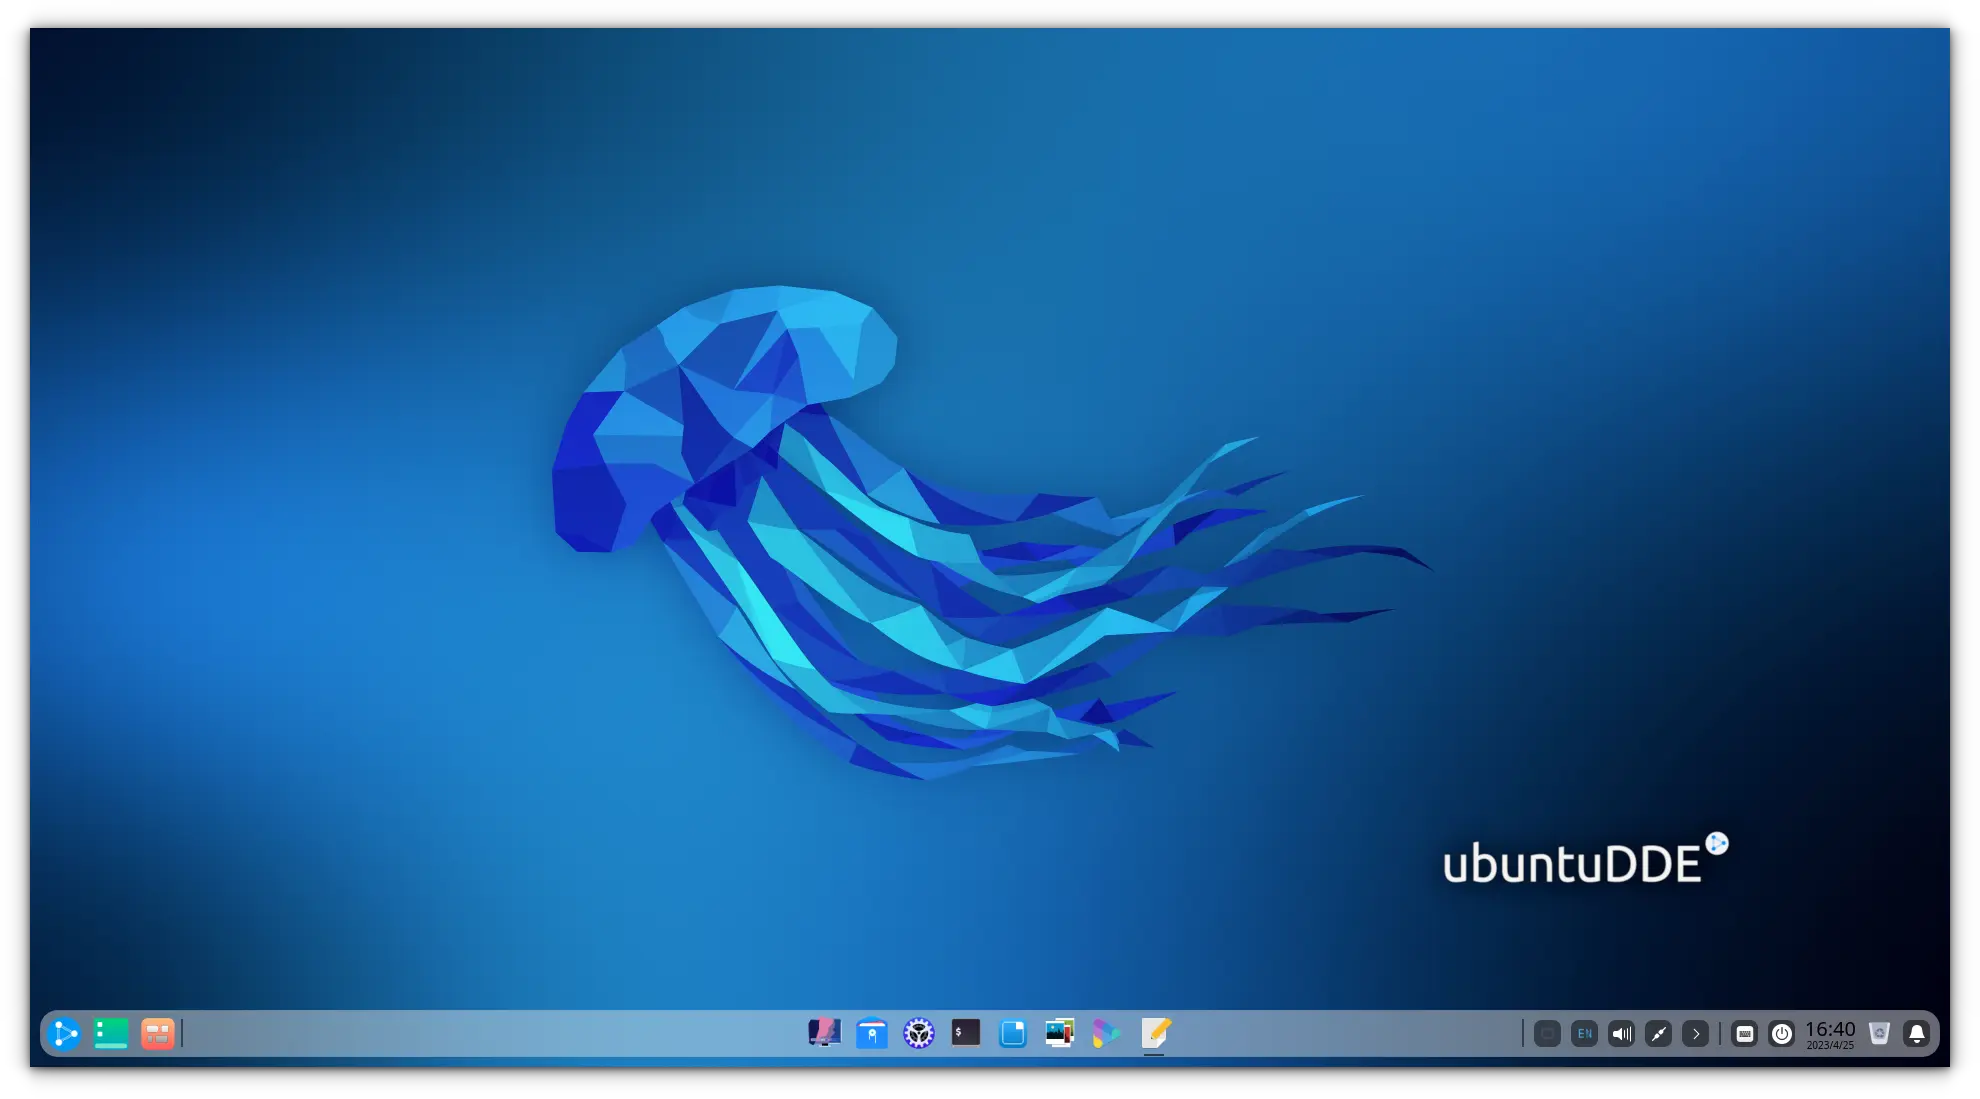 Ubuntu 22.04 LTS release with Deepin Desktop Environment